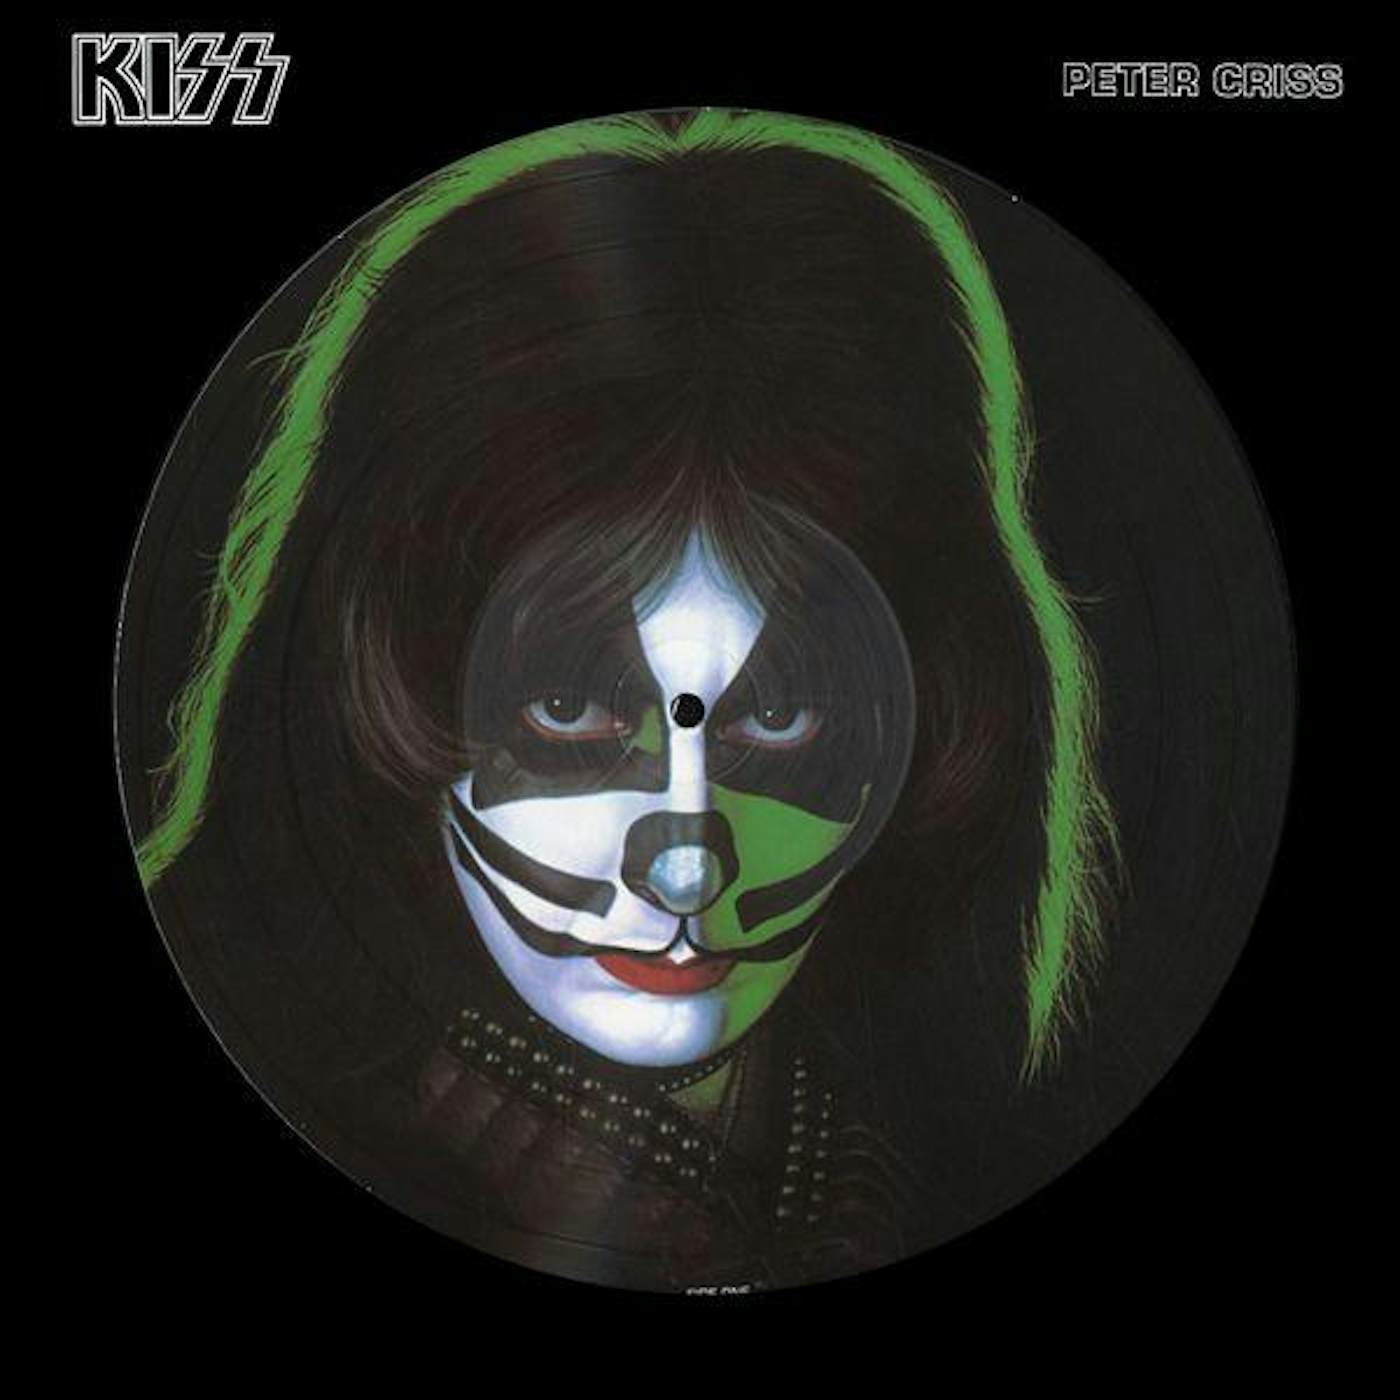 KISS PETER CRISS Picture Disc Vinyl Record